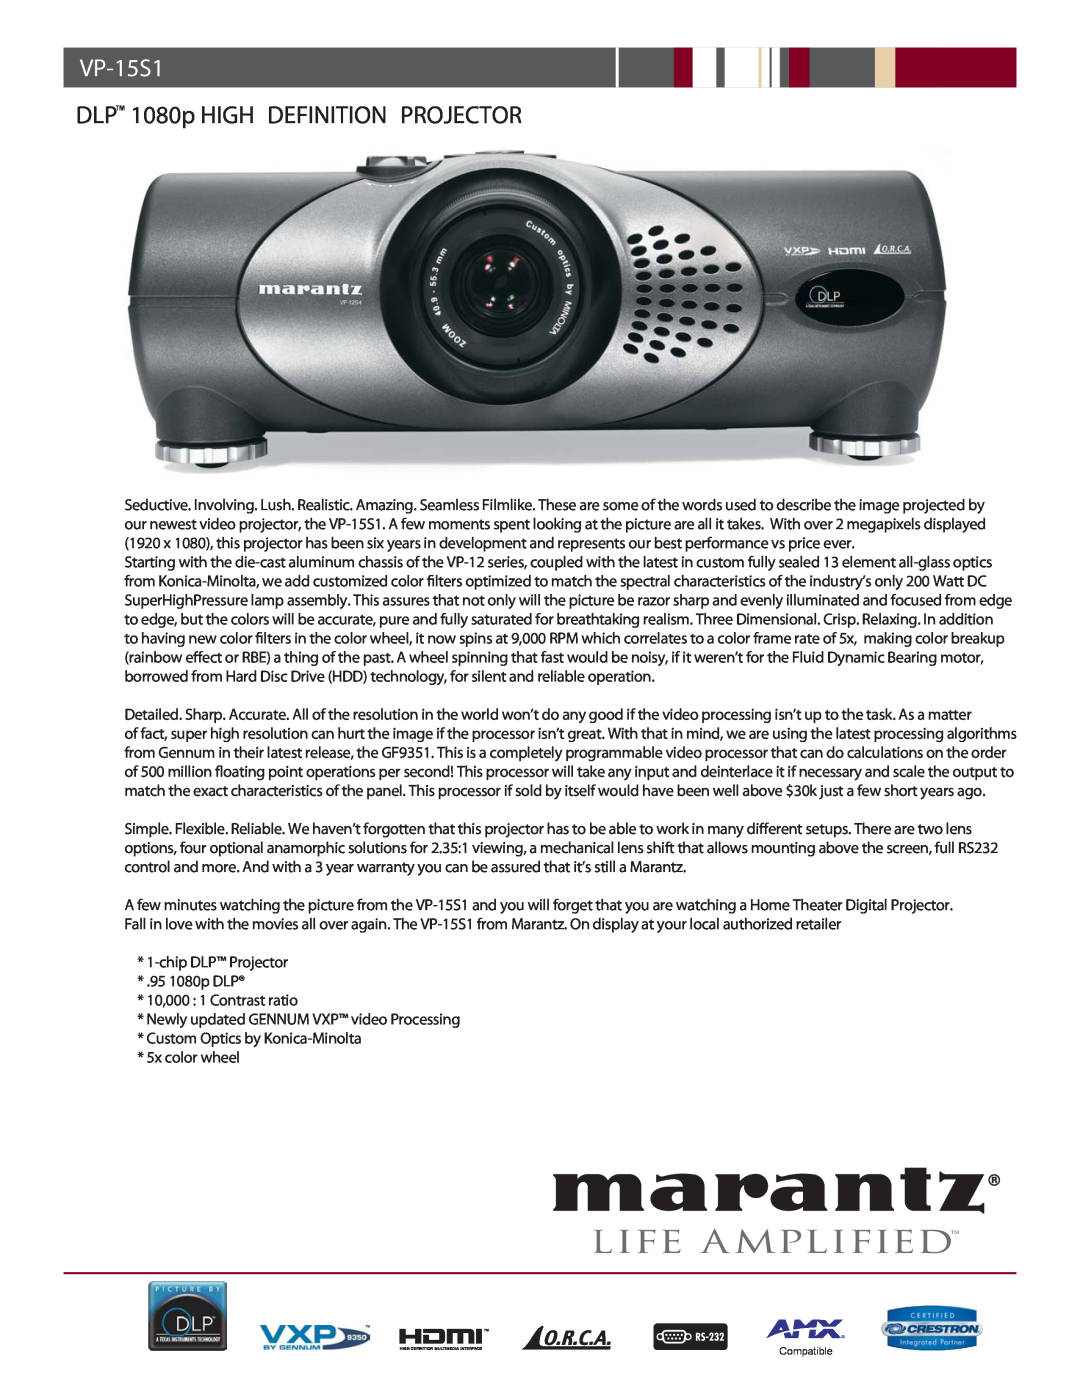 Marantz DLPTM 1080p manual VP-15S1, DLP 1080p HIGH DEFINITION PROJECTOR, Newly updated GENNUM VXP video Processing 